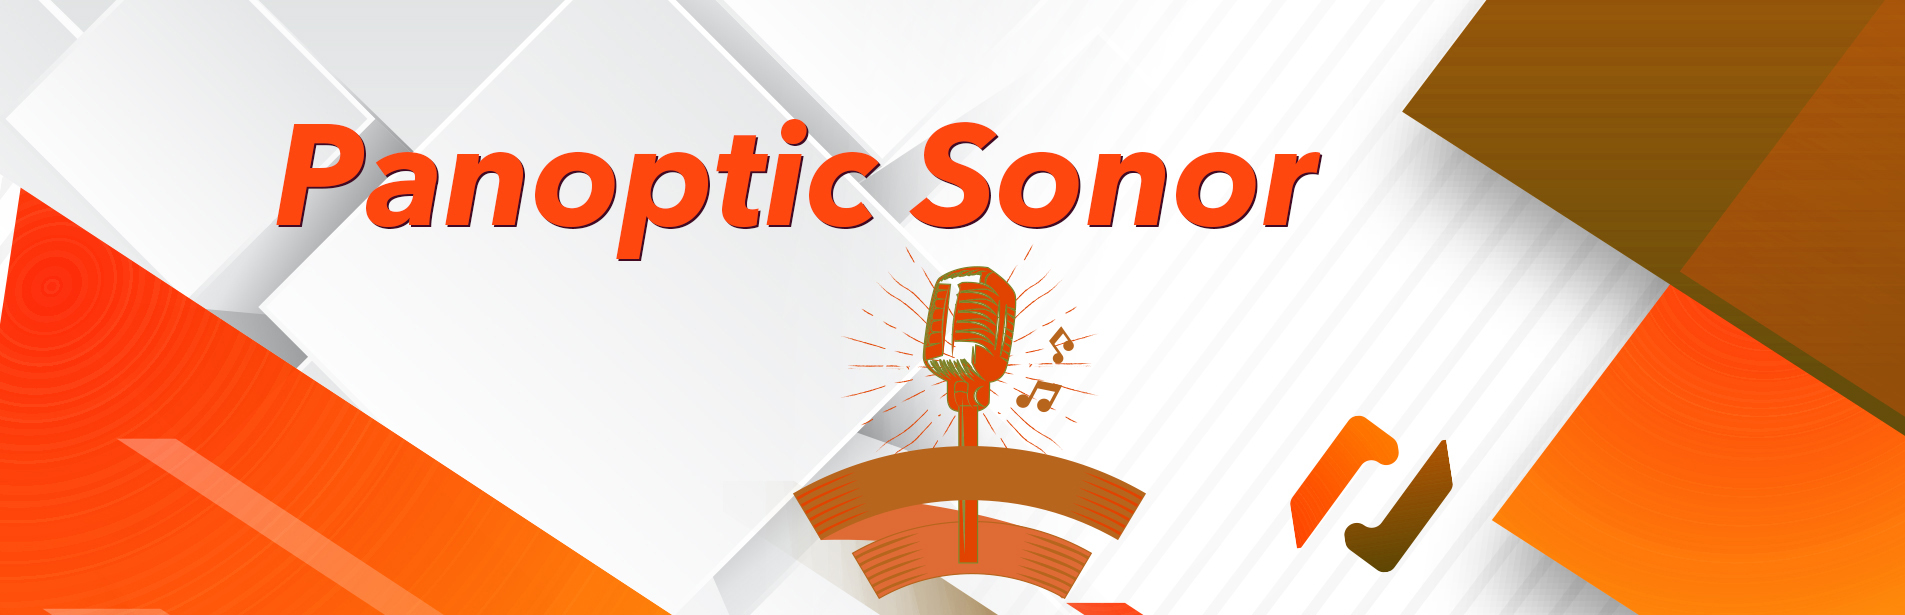 Panoptic Sonor